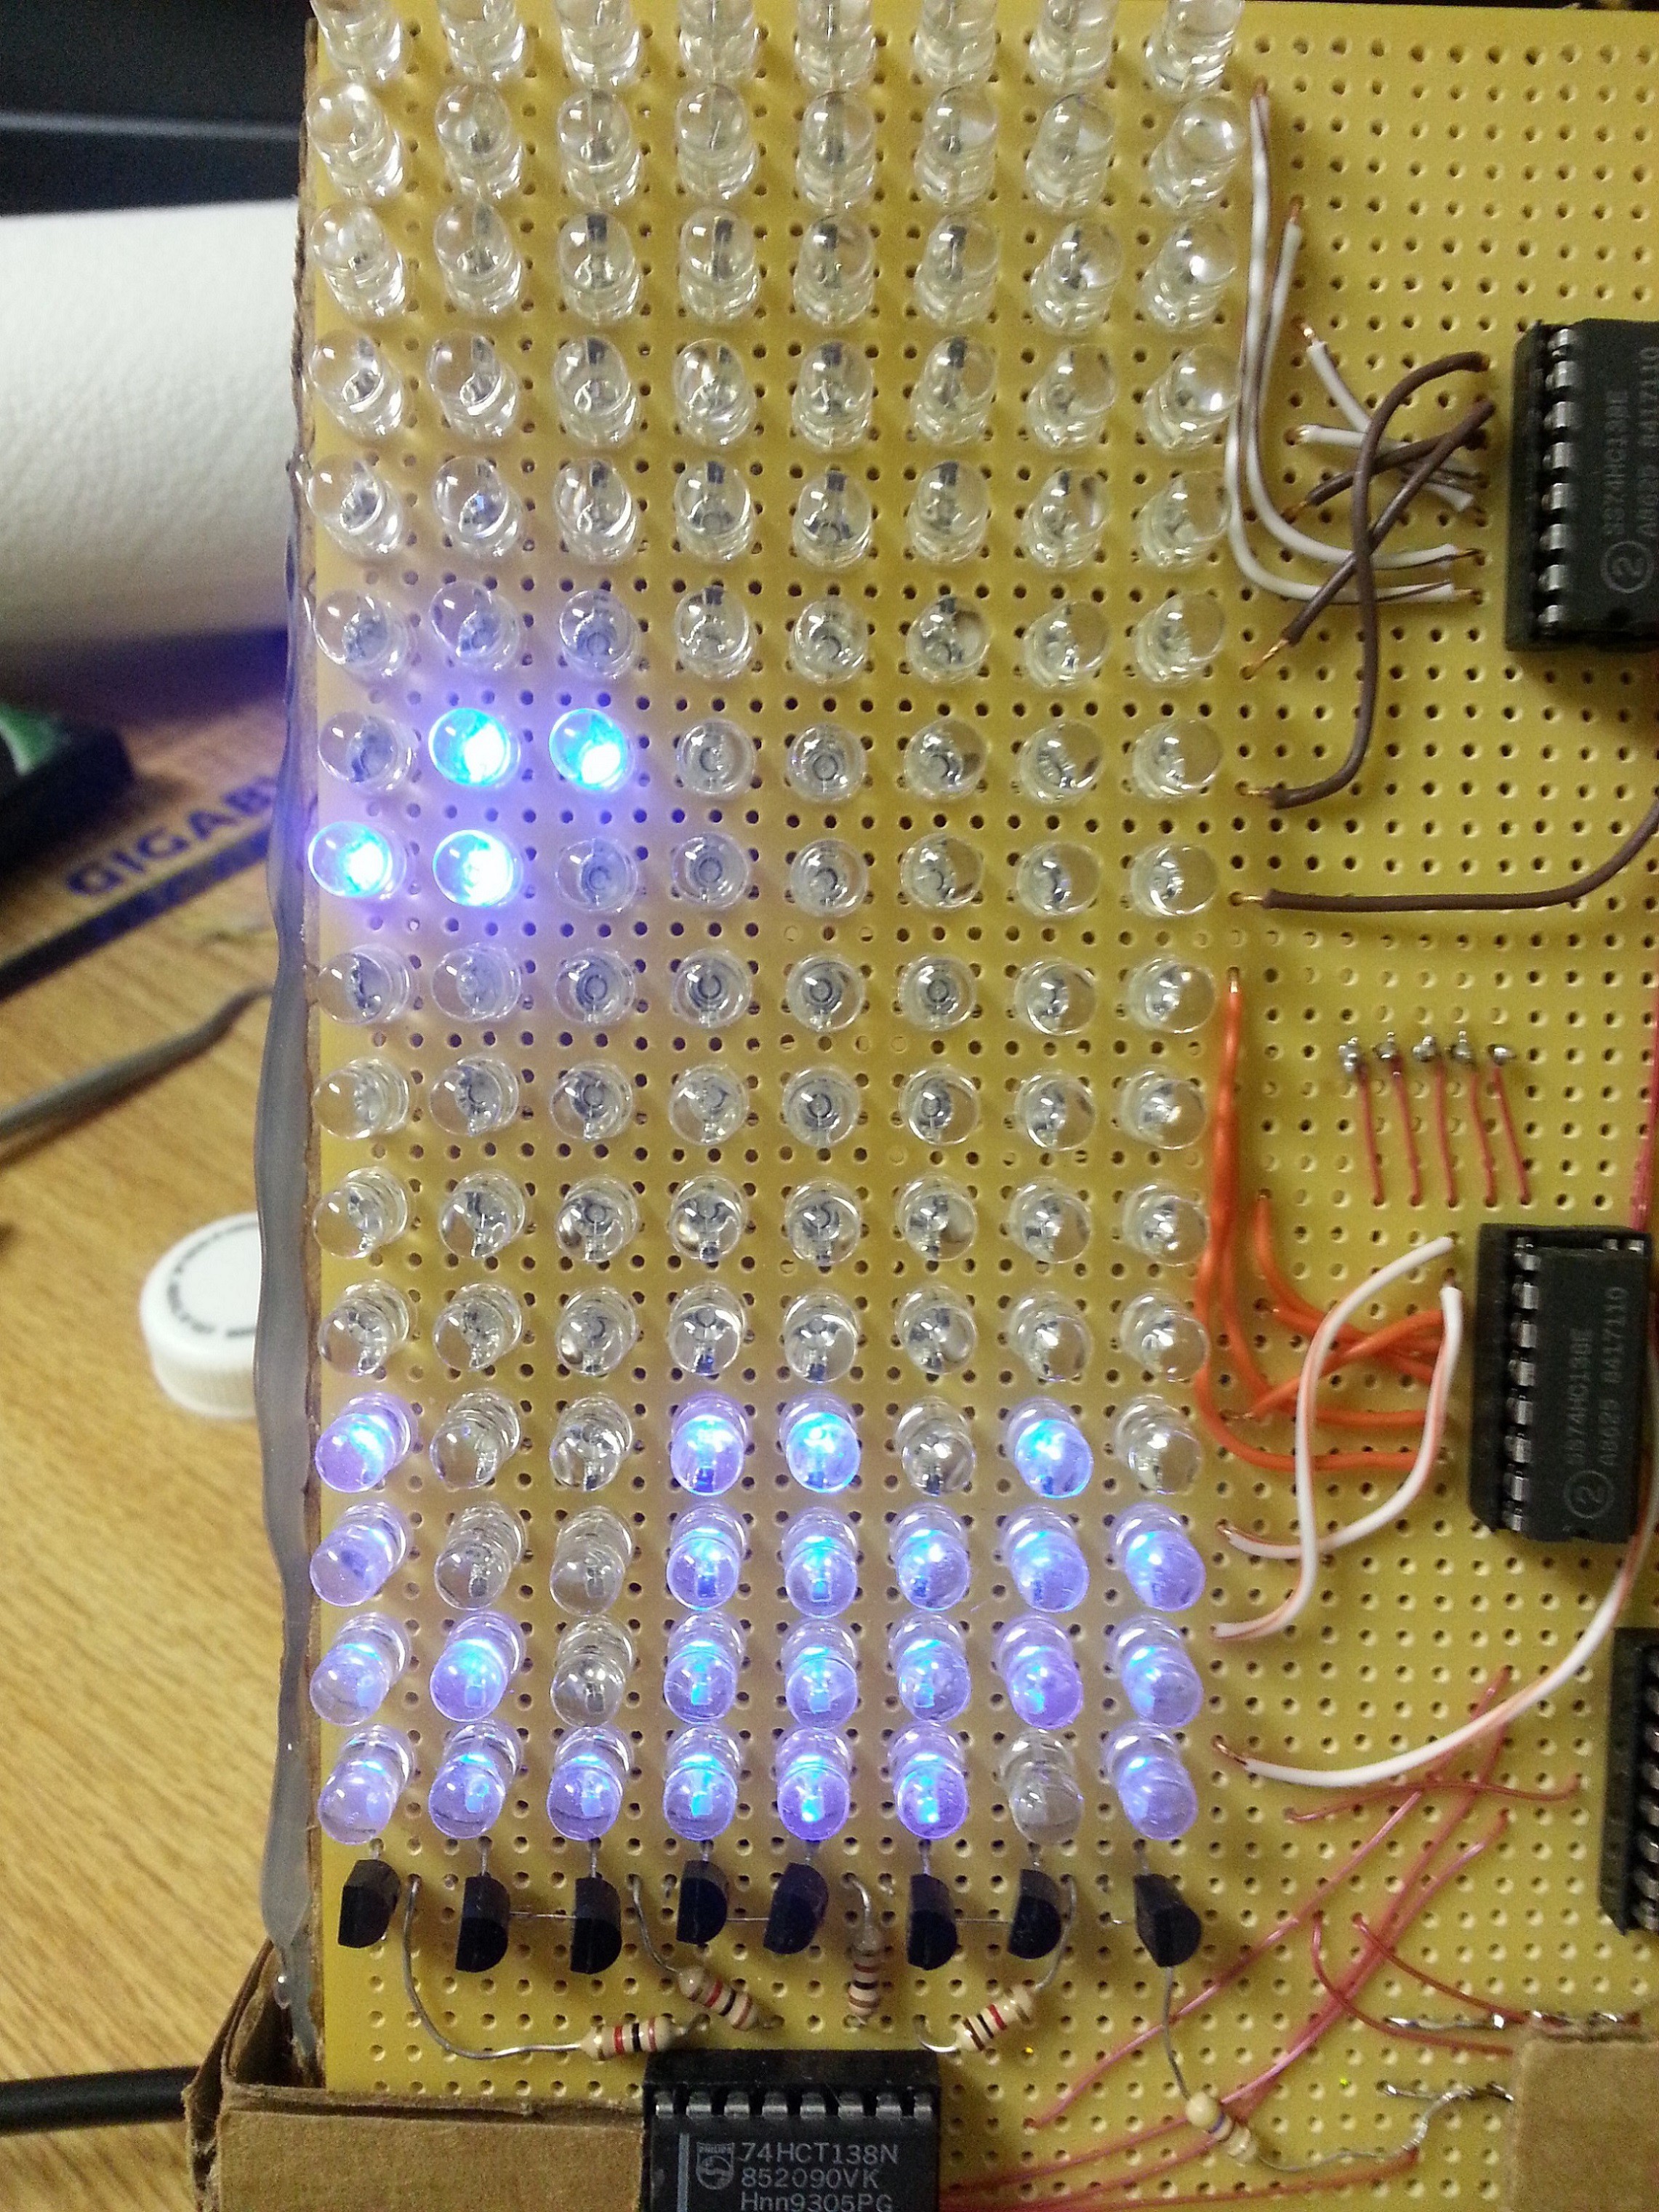 LED Matrix Tetris (class project) | Details | Hackaday.io